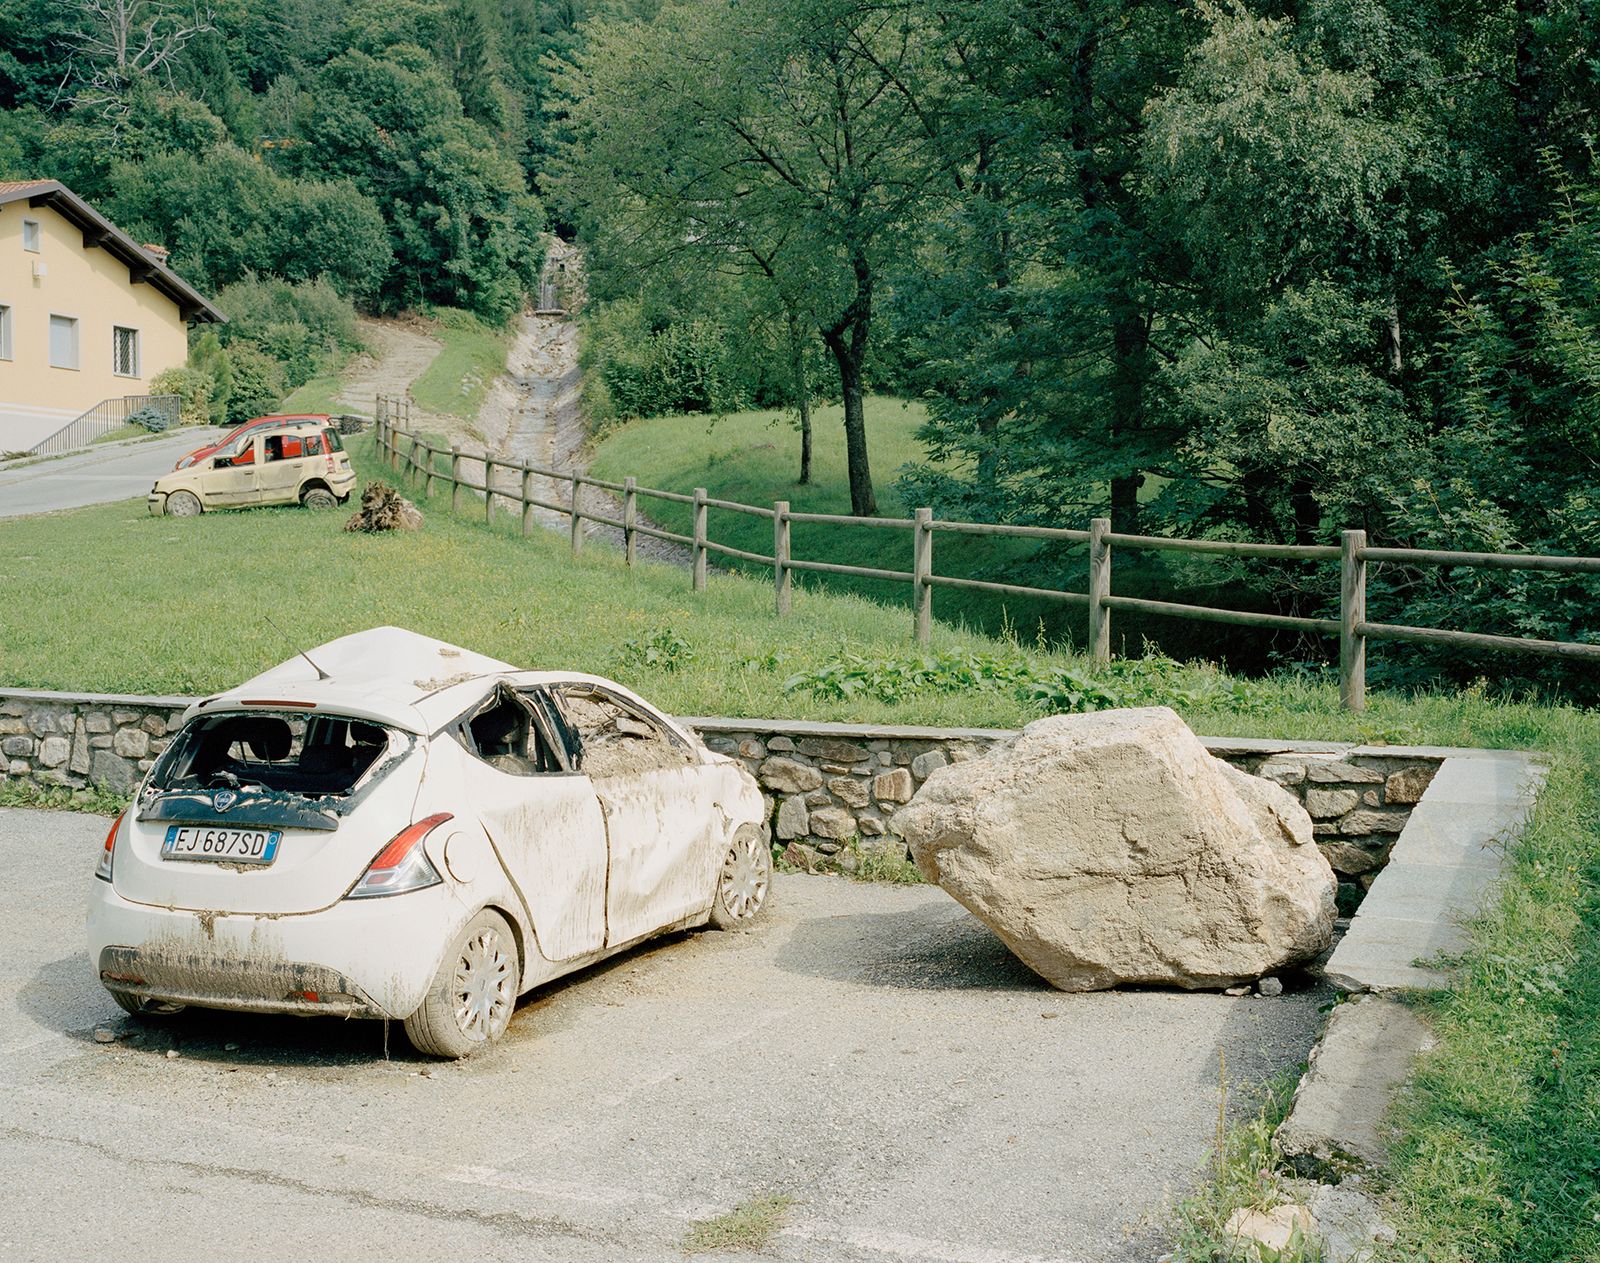 © Nicolò Panzeri & Mattia Micheli - Detail of a car hit by the landslide that devastated the village of Casargo. Casargo, Italy, 2019.